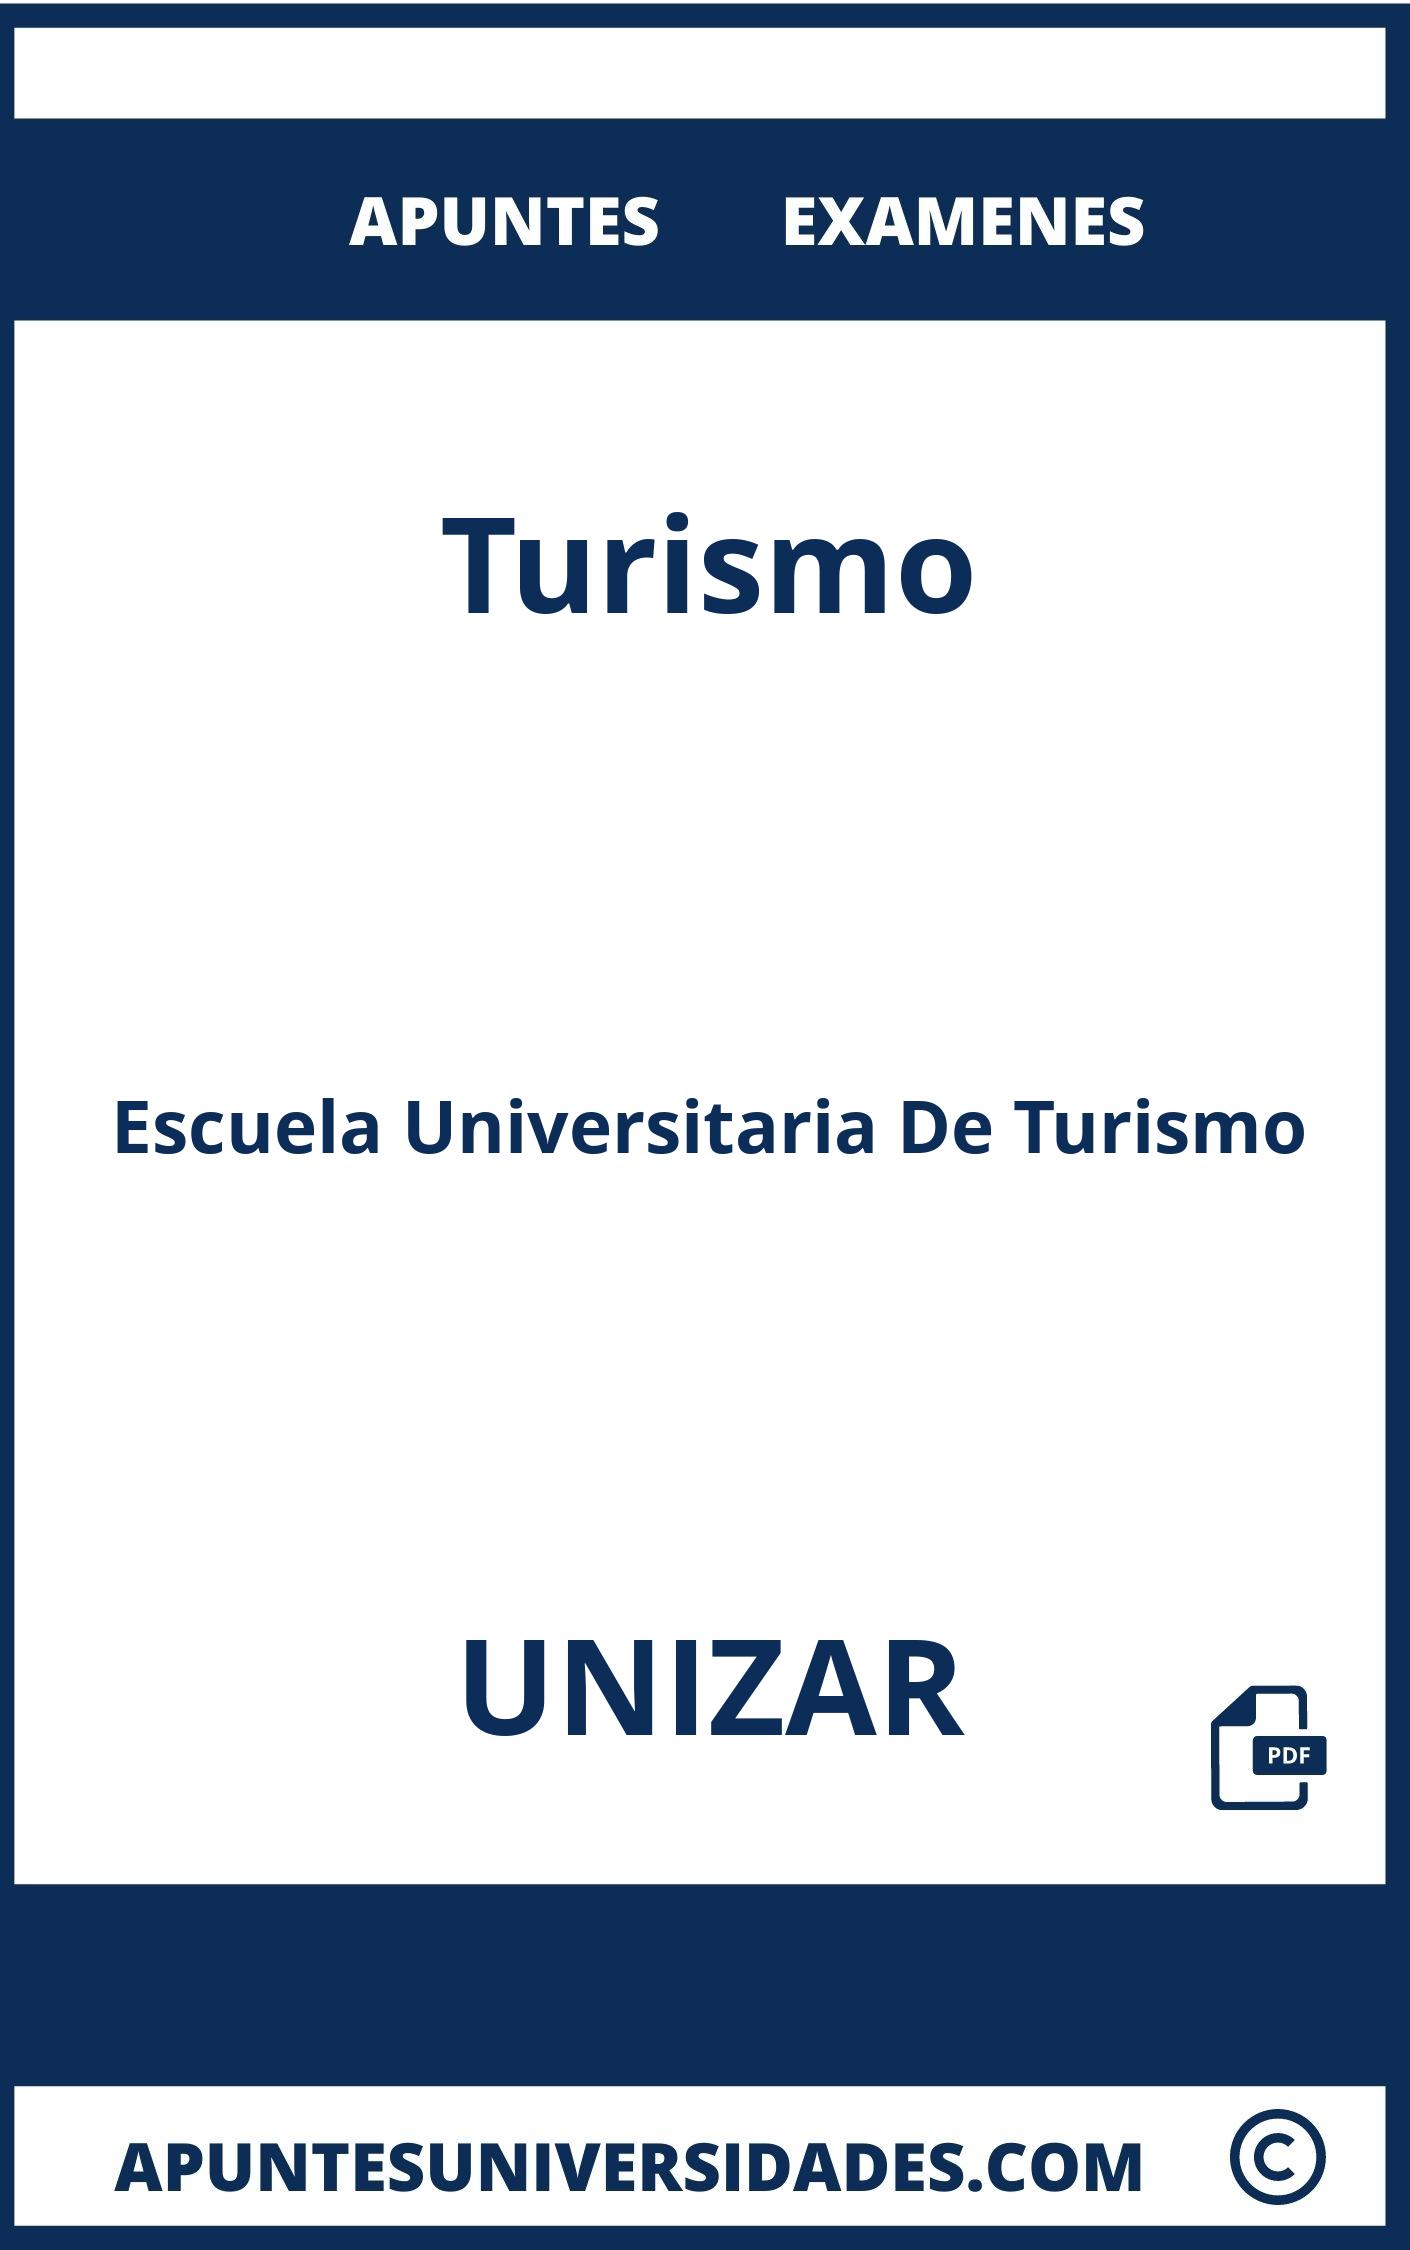 Apuntes Examenes Turismo UNIZAR